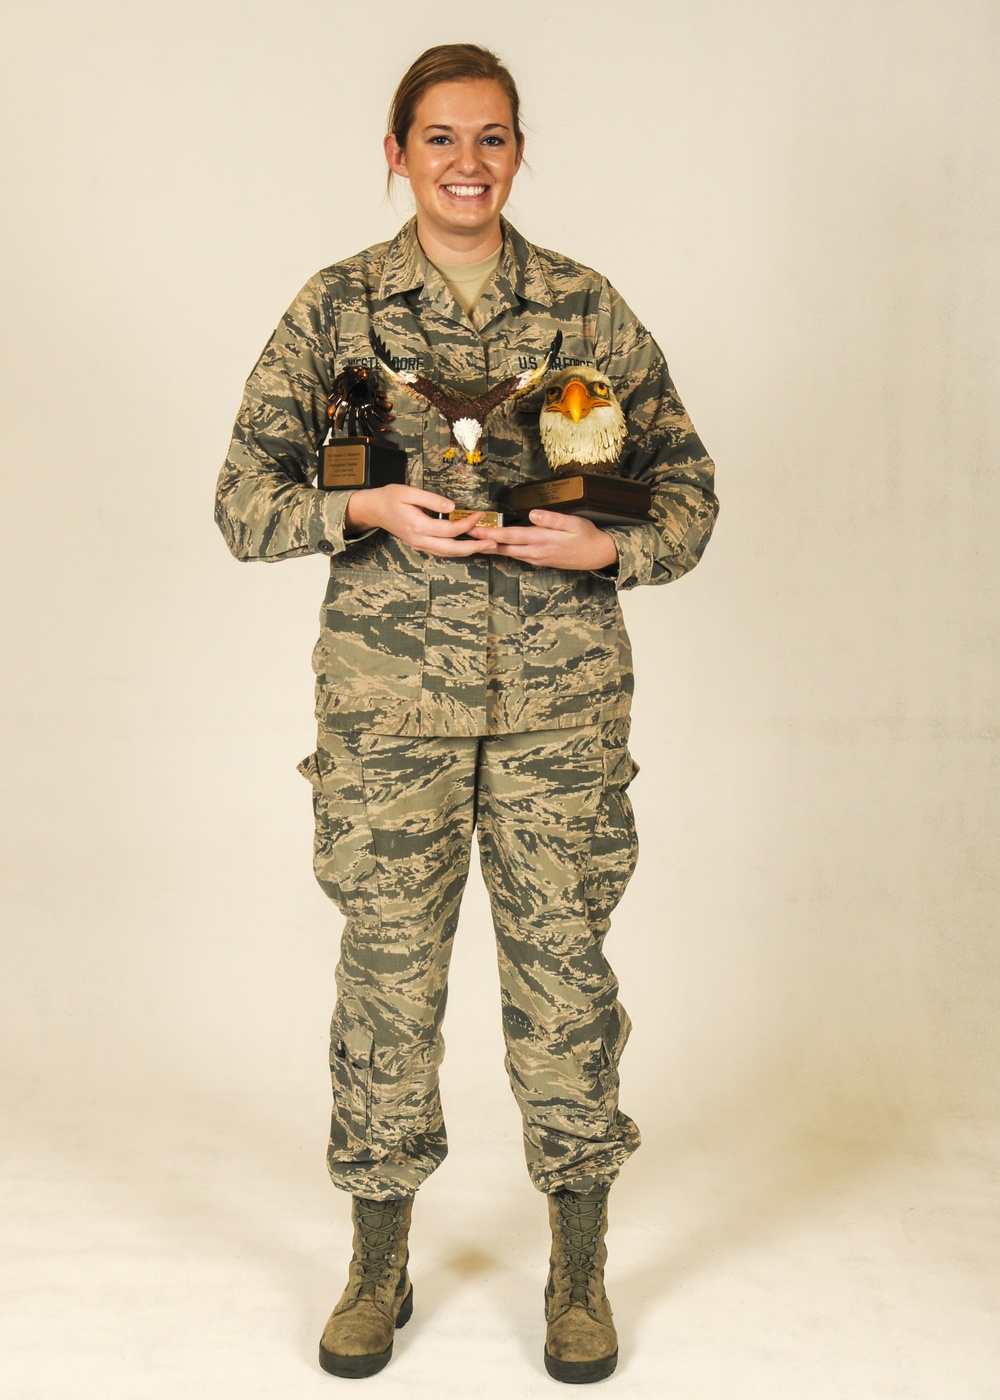 Airman Feature: Staff Sgt Brianna Westendorf